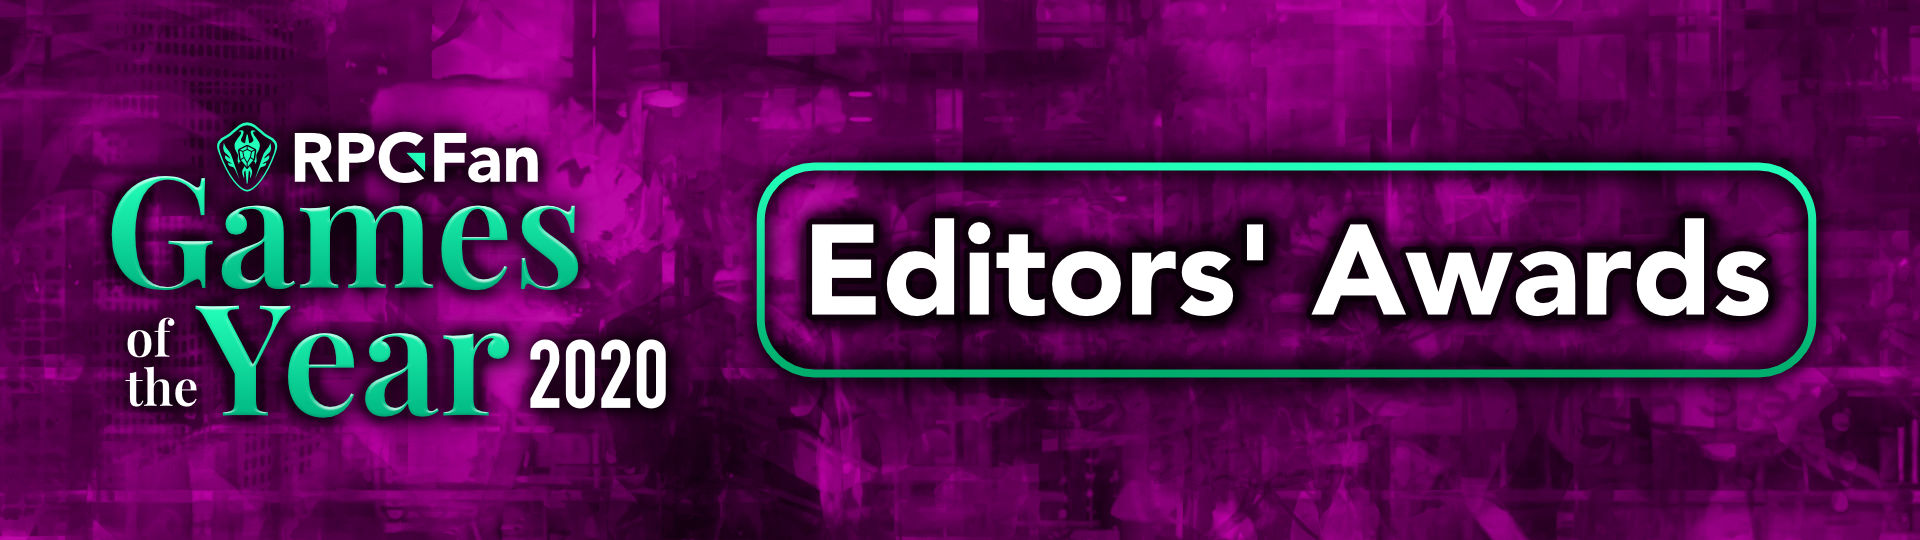 RPGFan Games of the Year 2020 Editors Awards Header